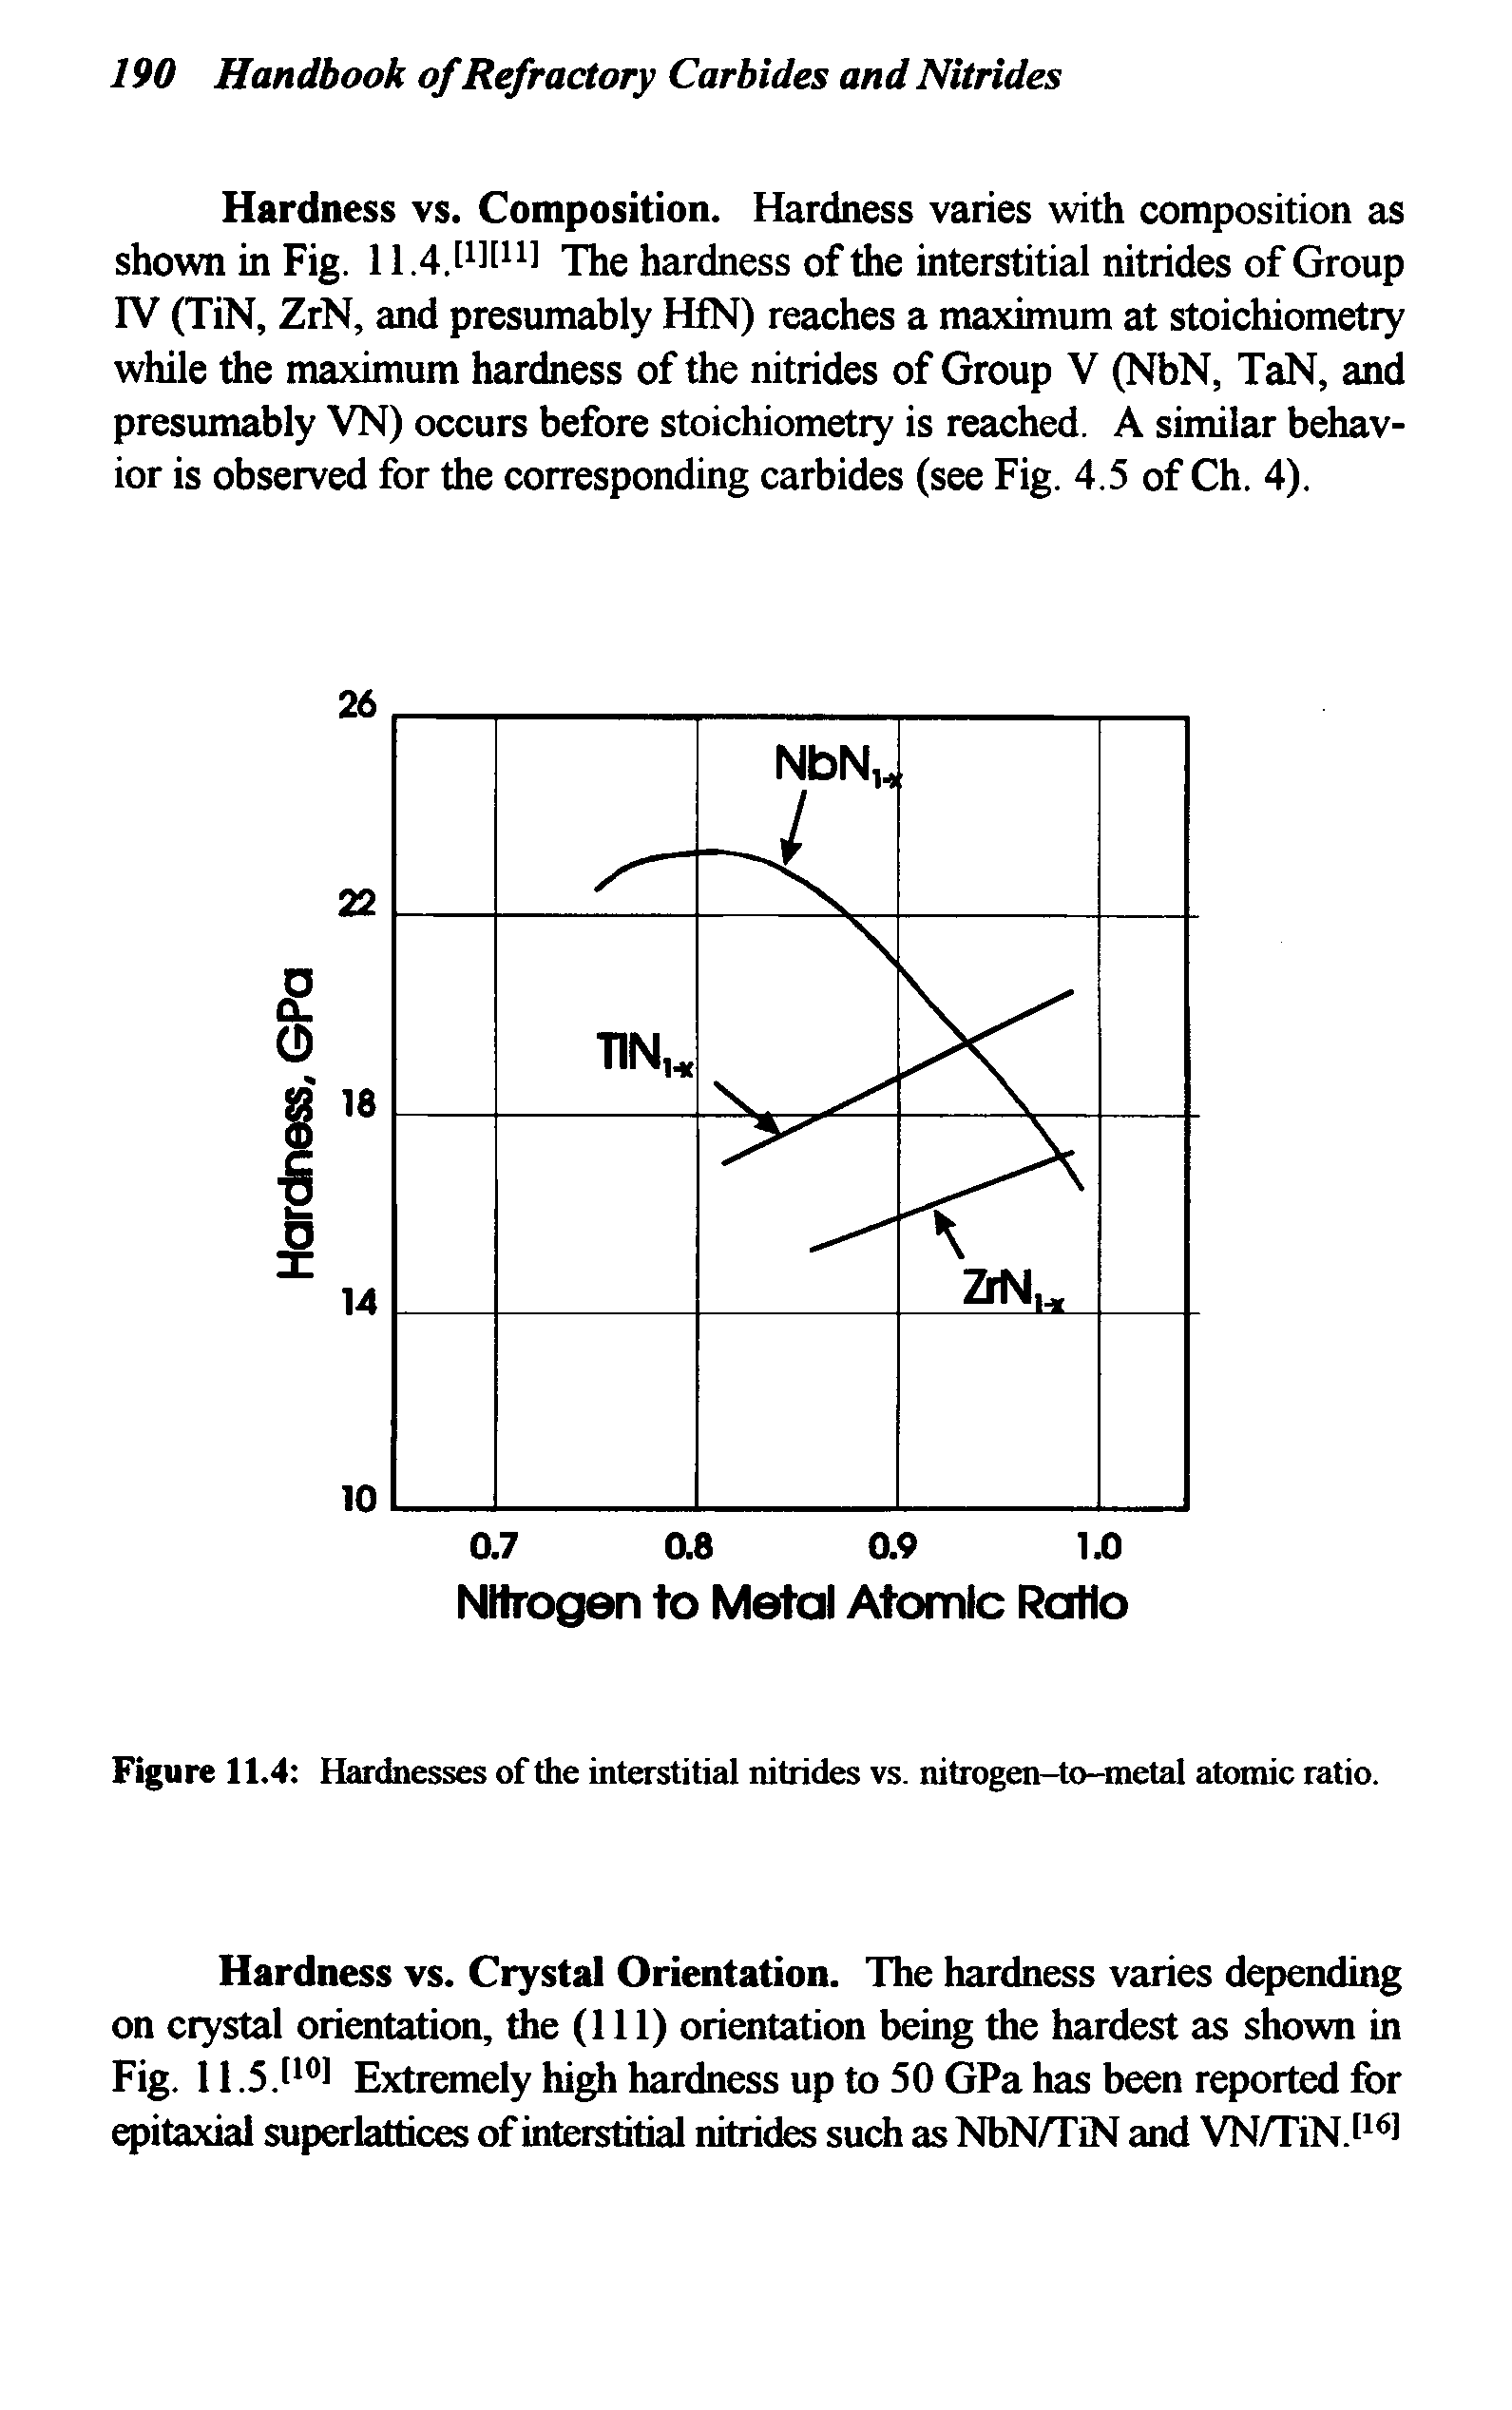 Figure 11.4 Hardnesses of the interstitial nitrides vs. nitrogen-to-metal atomic ratio.